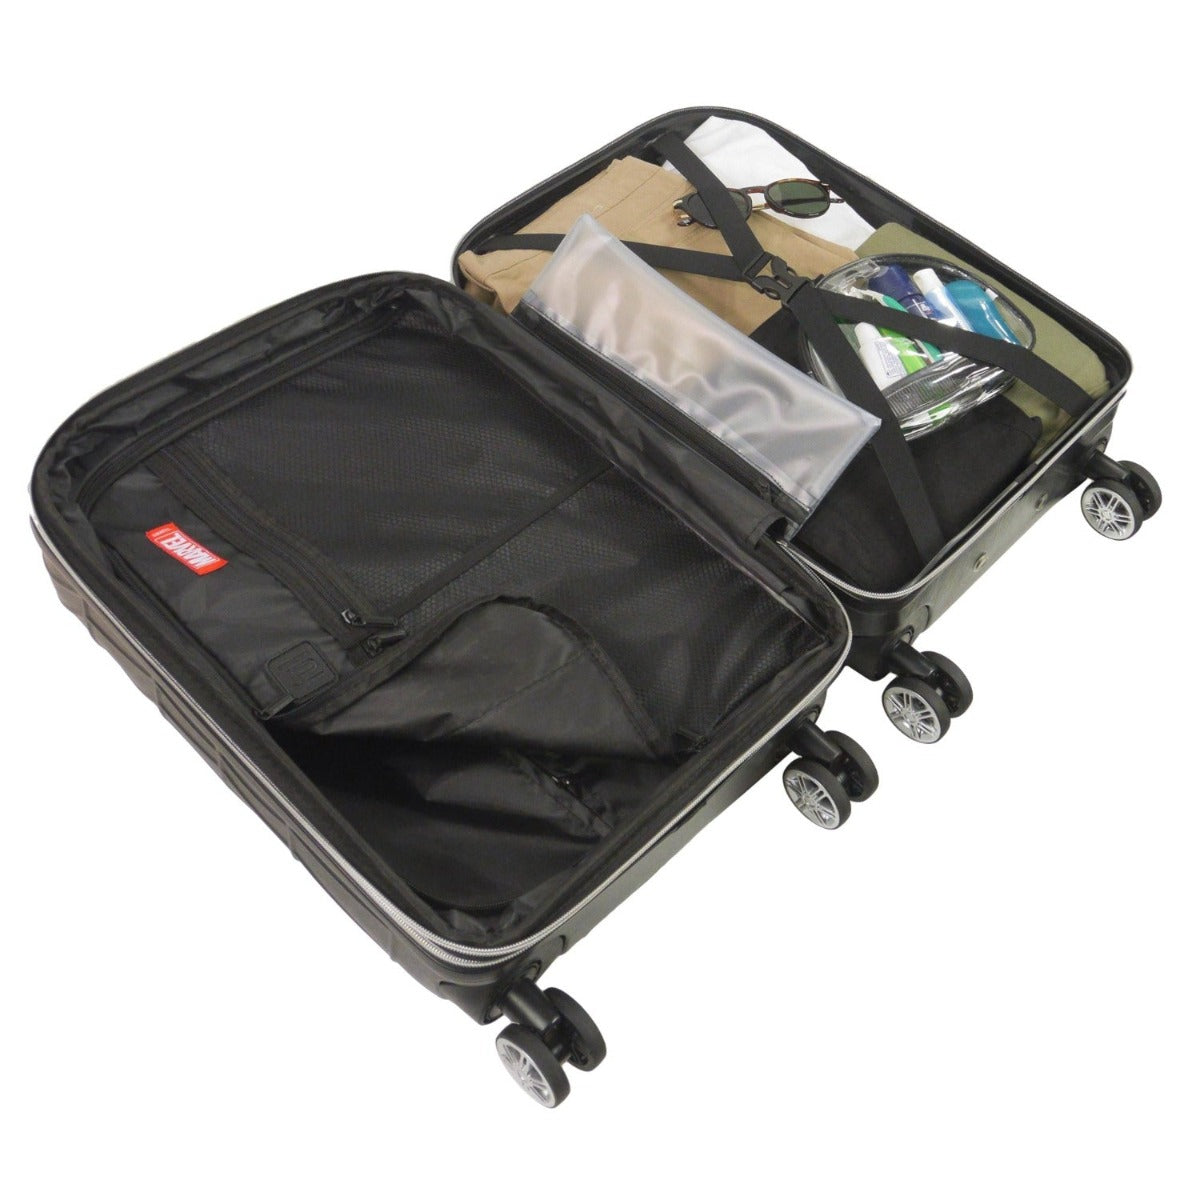 Spiderman Spinner Suitcase Luggage 3pc Set Black